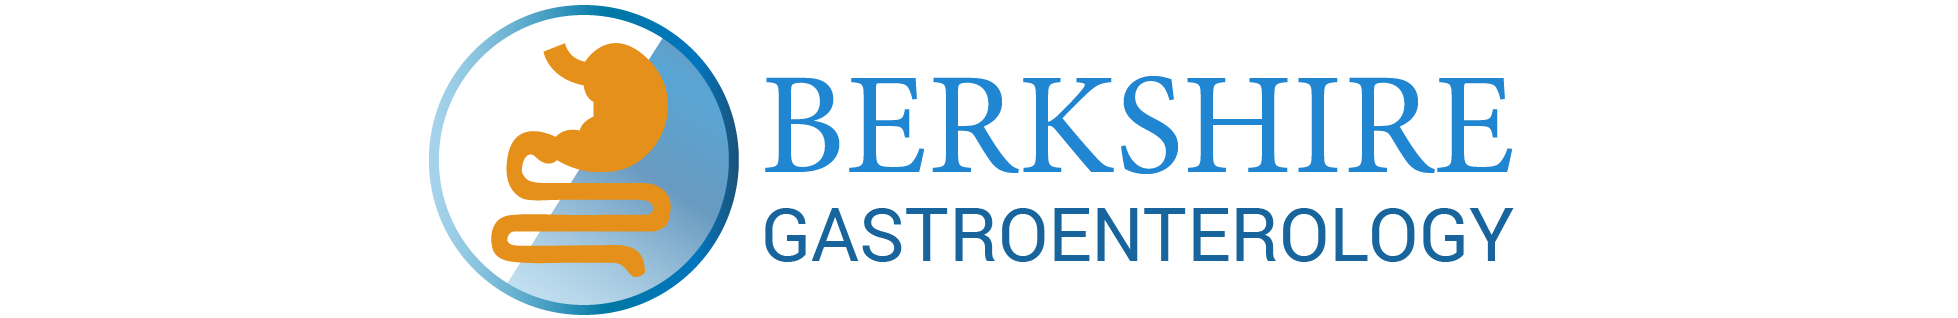 Berkshire Gastroenterology